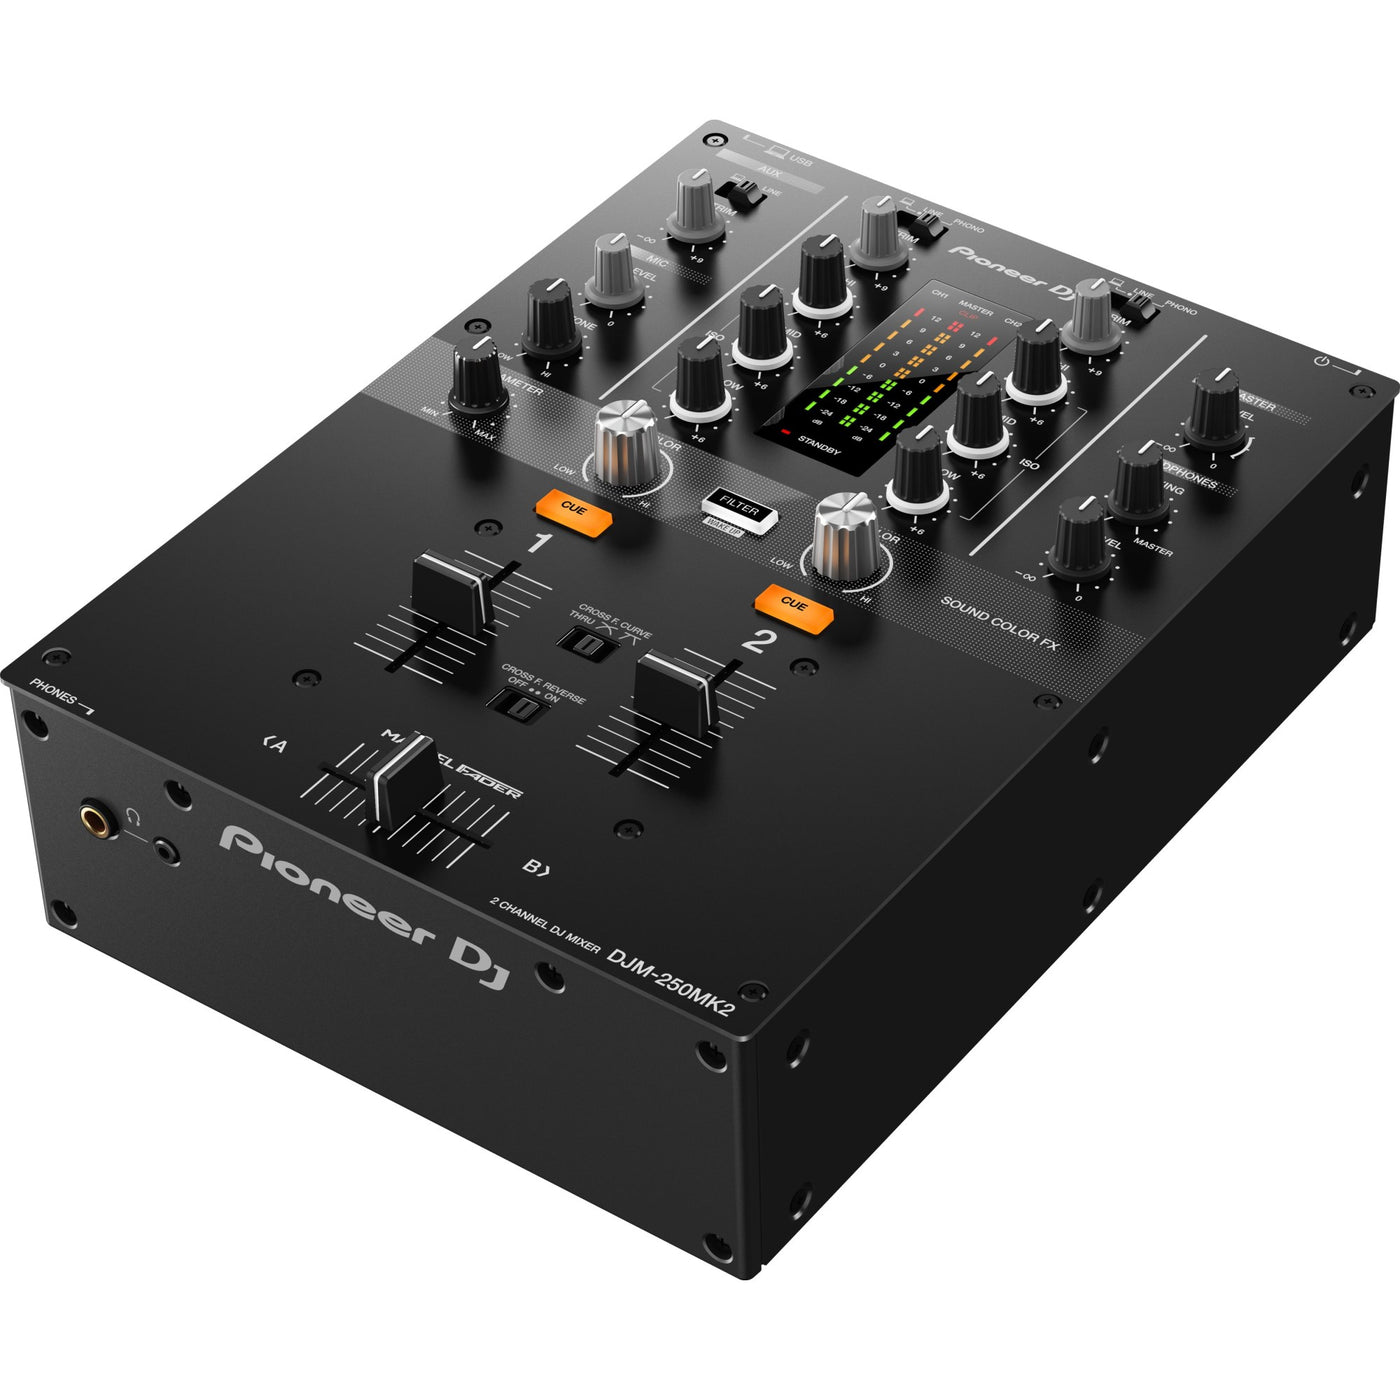 Pioneer DJ DJM-250MK2 2-Channel DJ Mixer with Independent Channel Filter with rekordbox DVS, Professional DJ Equipment Audio Interface Switcher